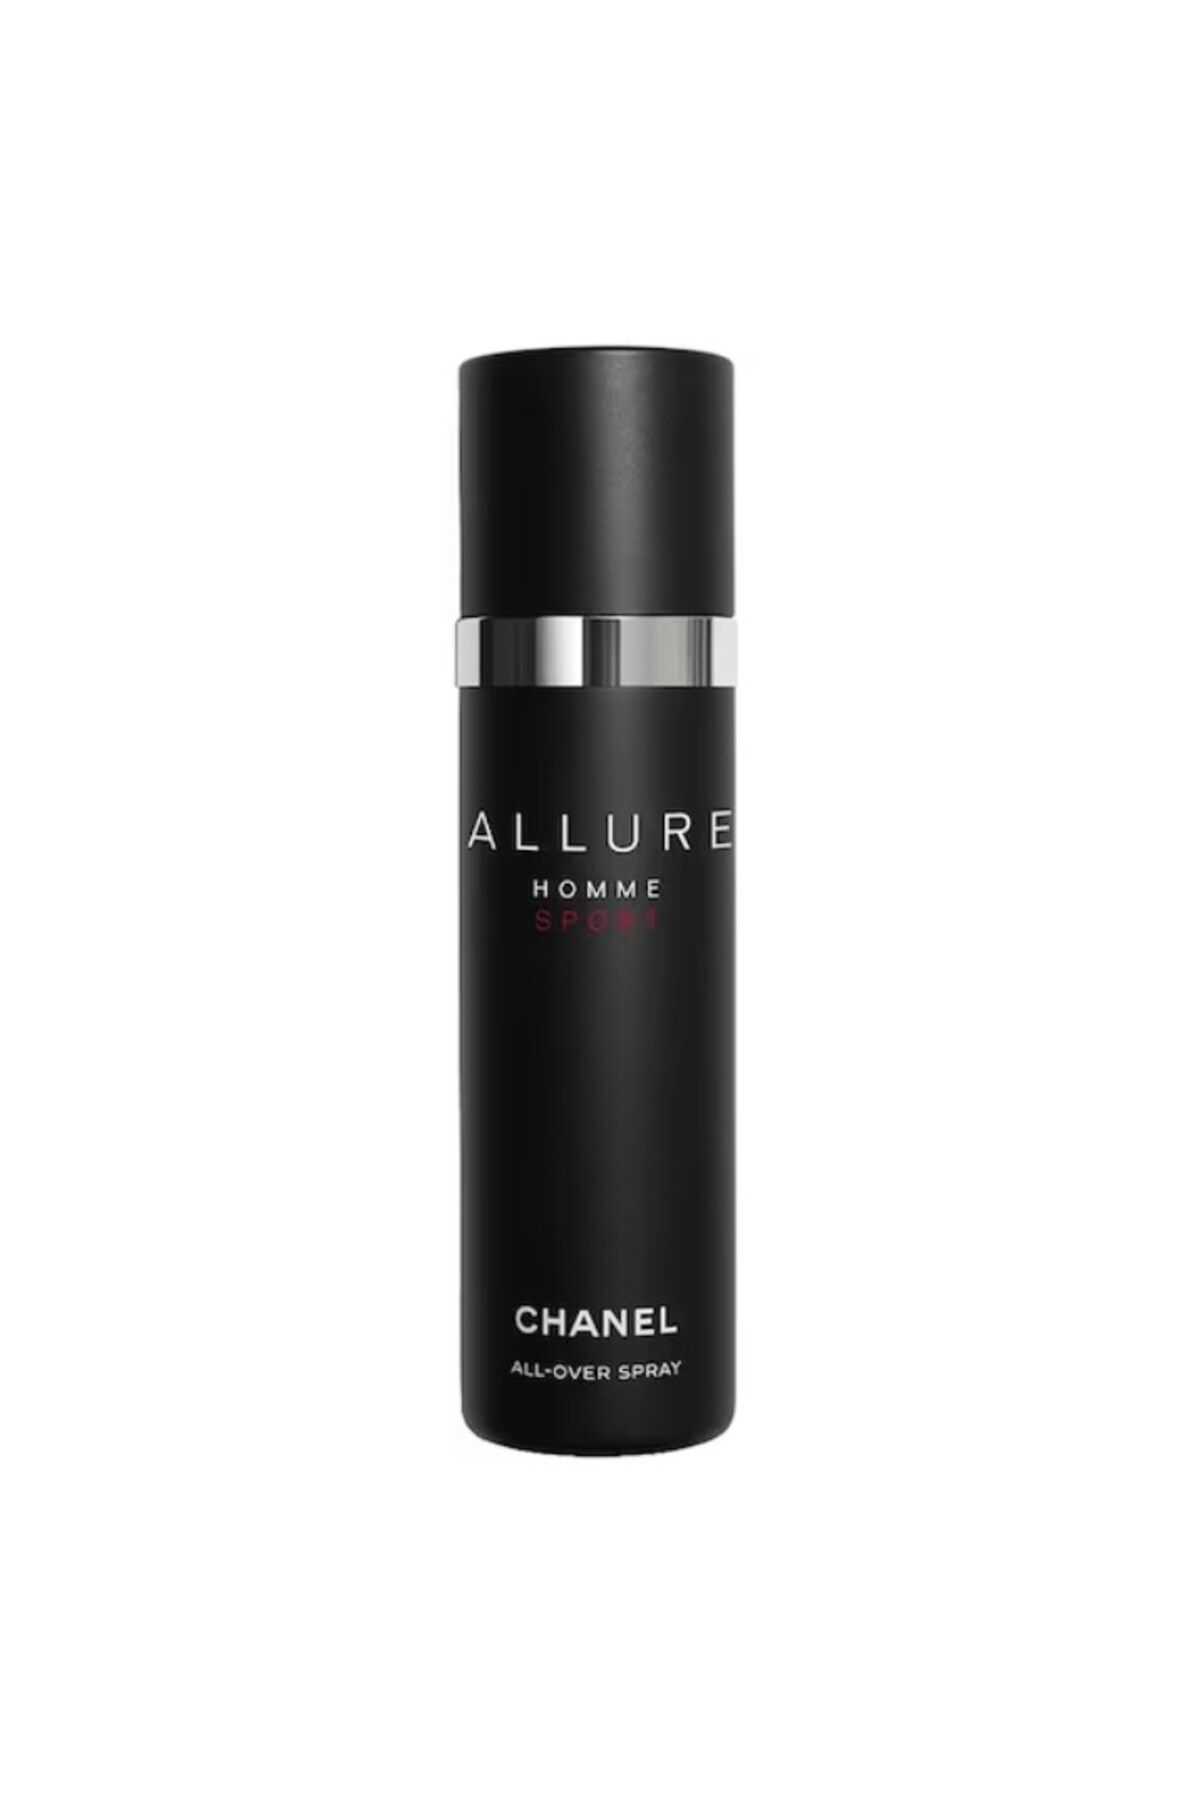 Chanel Allure Homme Sport All-over Spray Vücut Spreyi Deodorant 100 ml